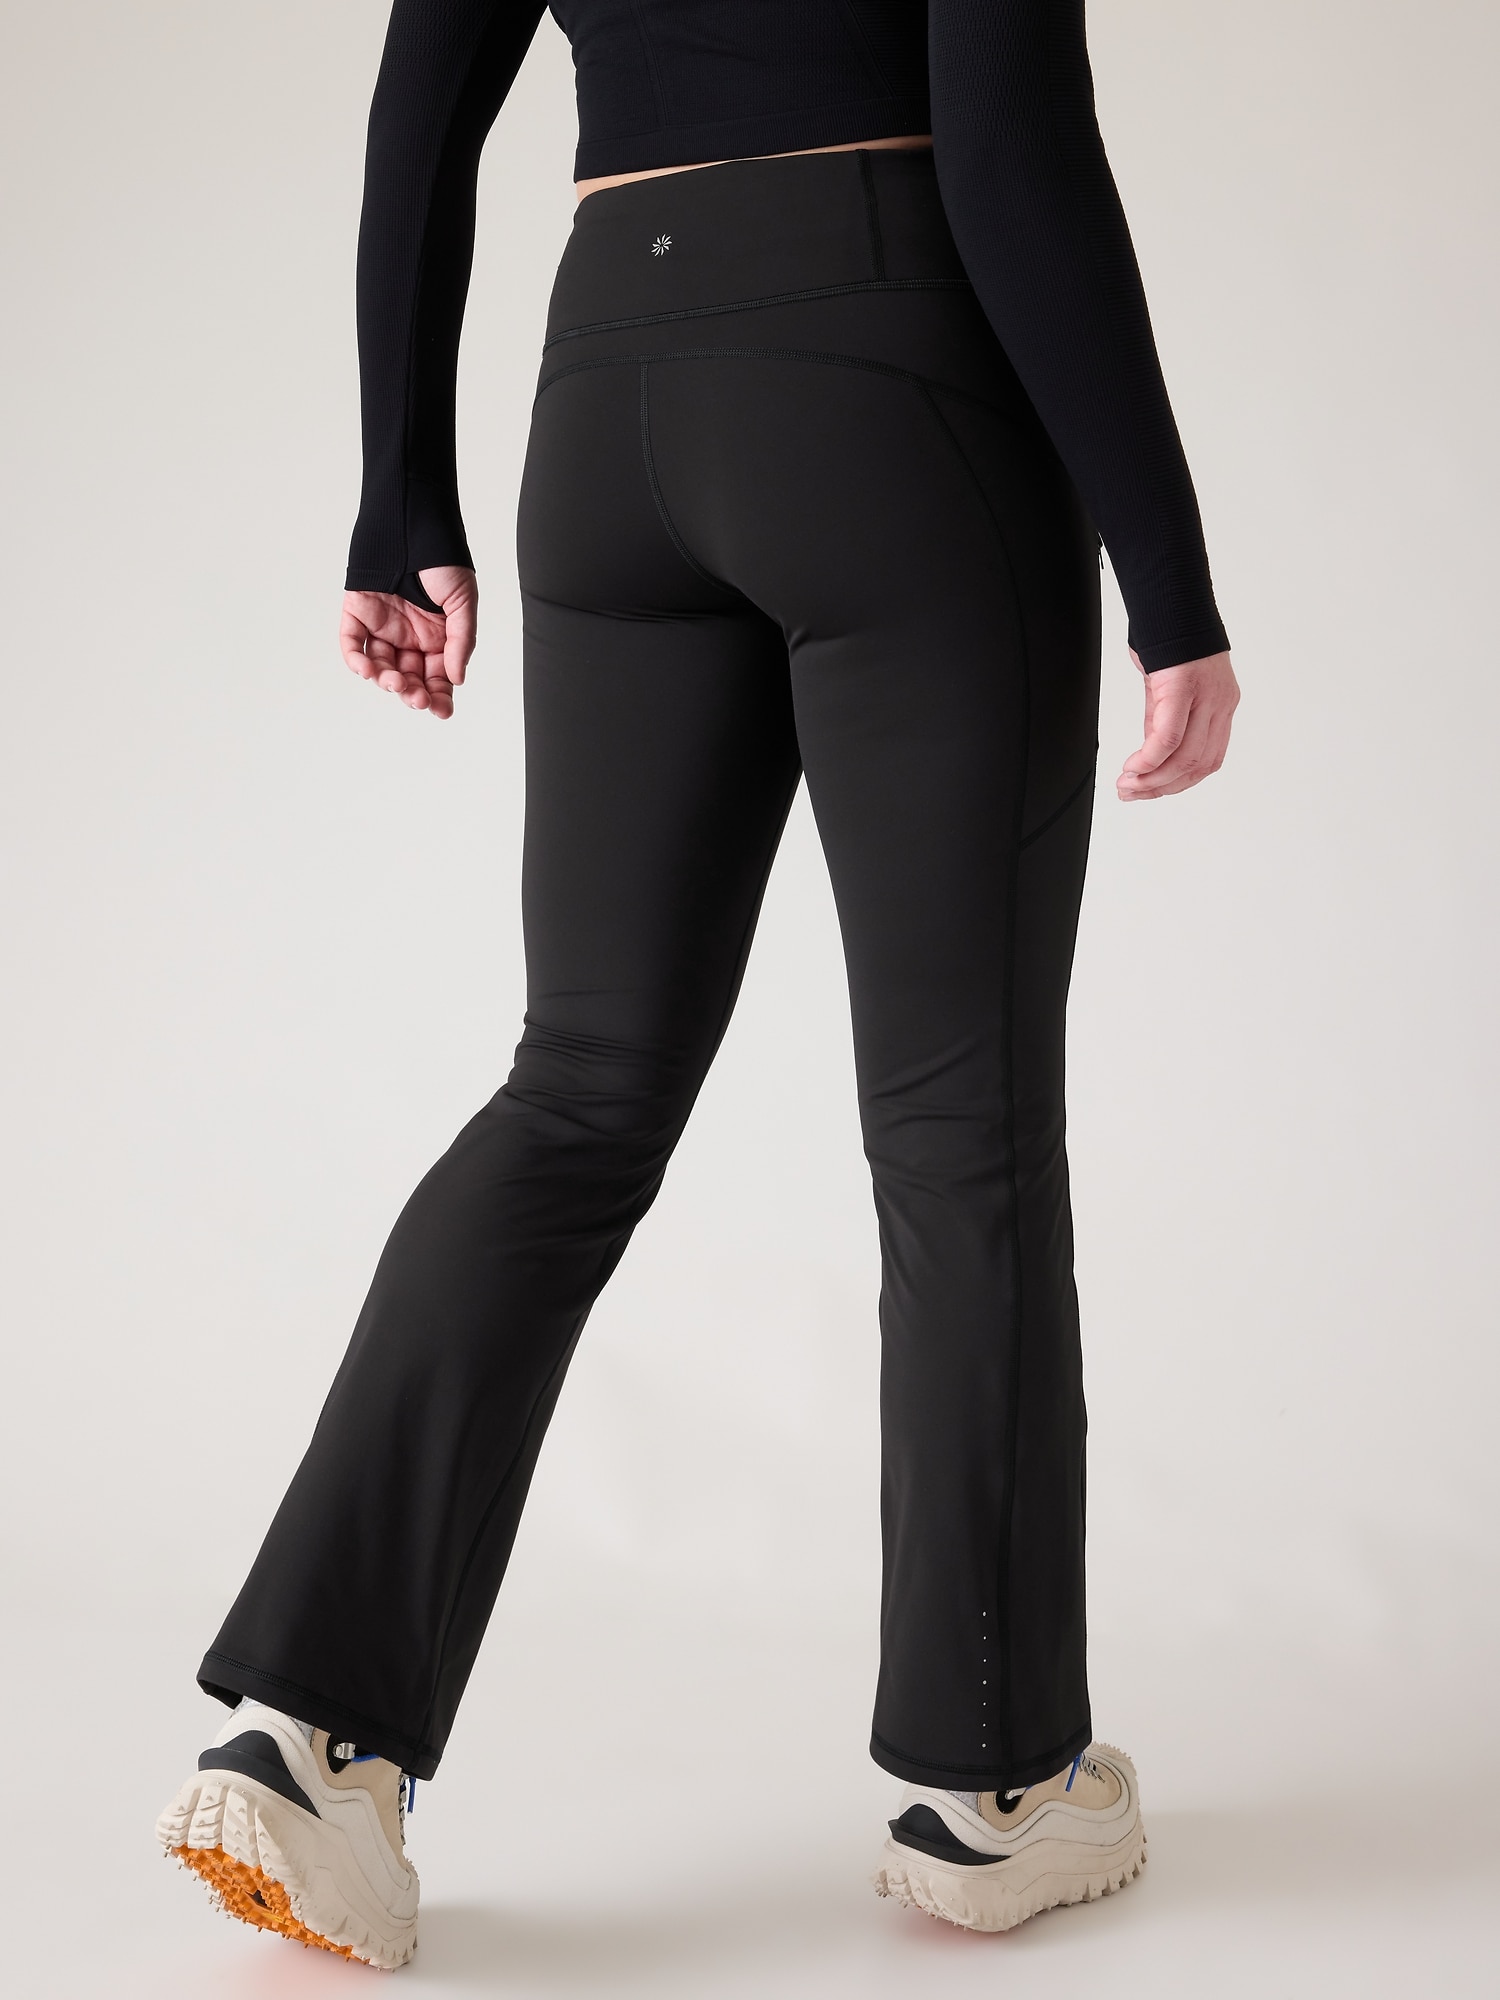 Lululemon Athletica Women Size 6 Groove Pant Boot Cut Black White Yoga Pants